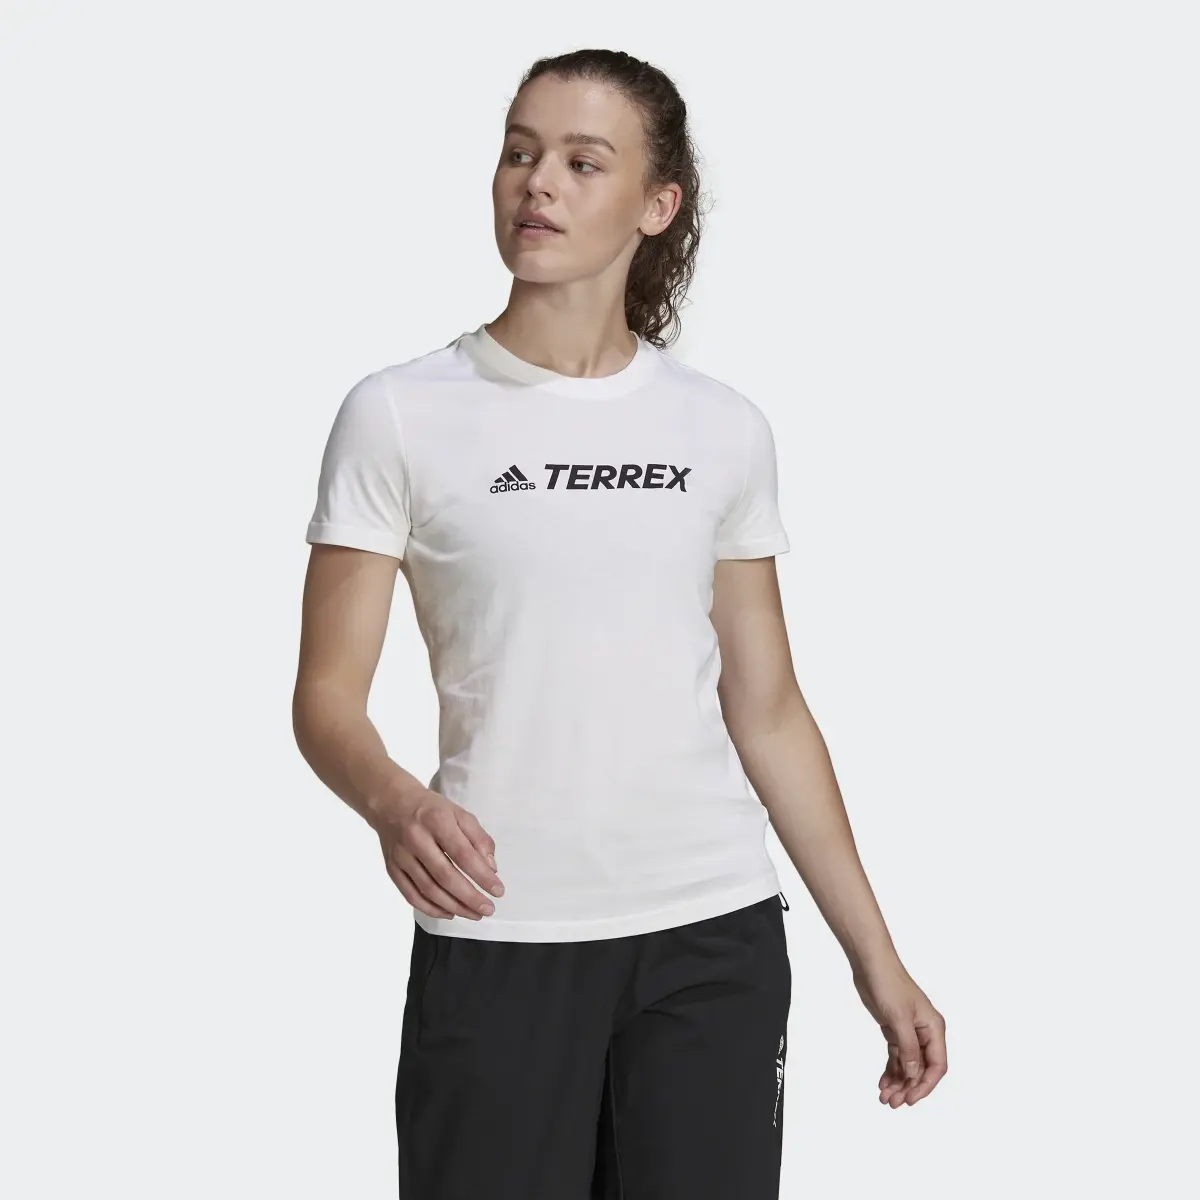 Adidas TERREX Classic Logo T-Shirt. 2